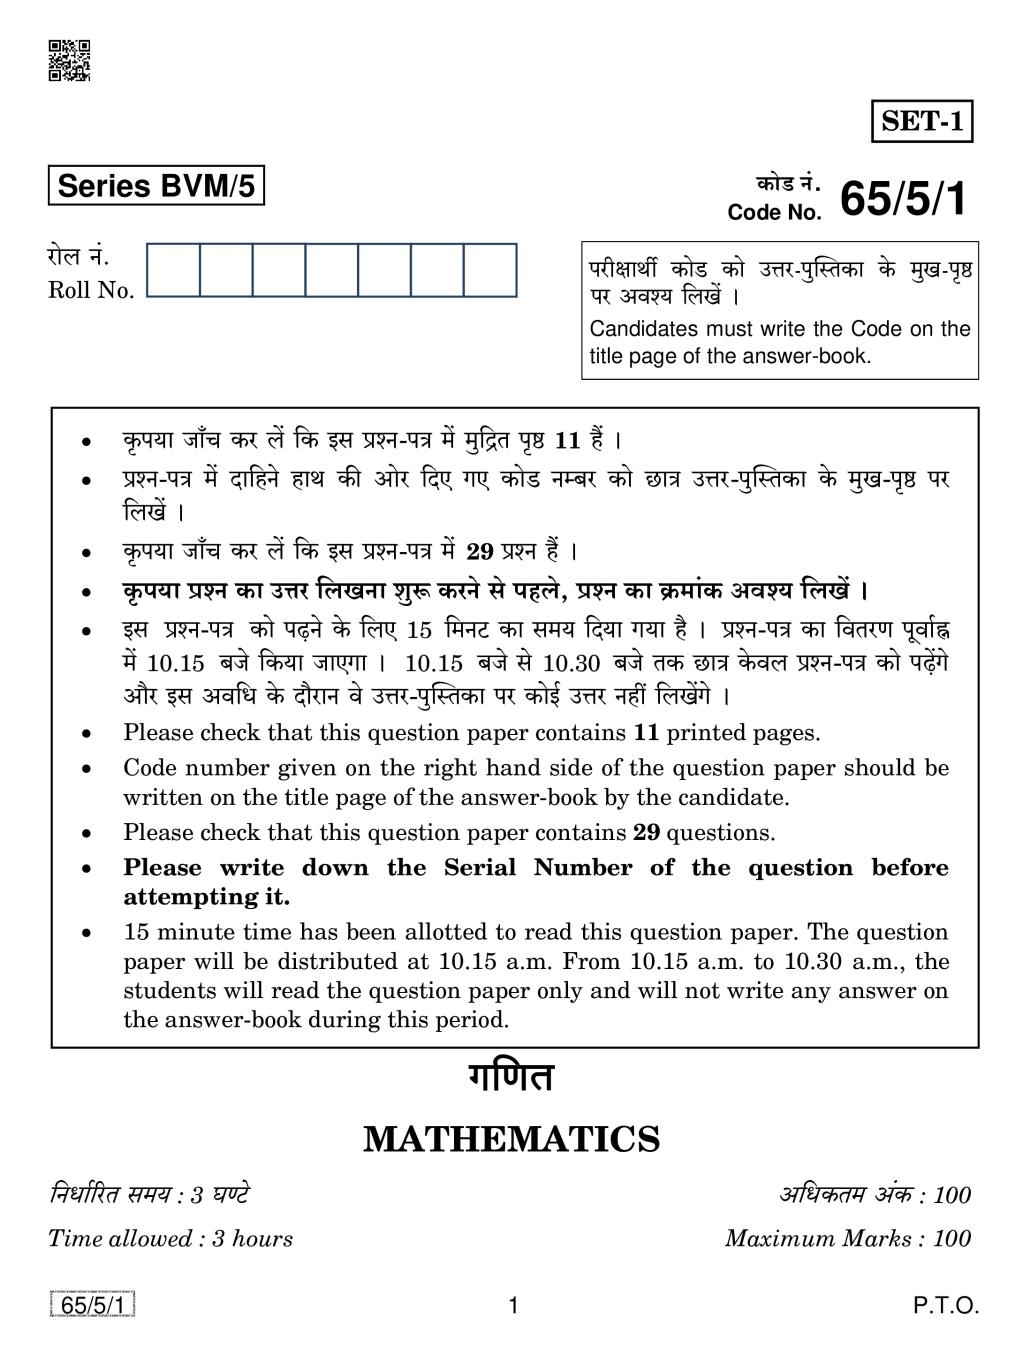 CBSE Class 12 Mathematics Question Paper 2019 Set 5 - Page 1